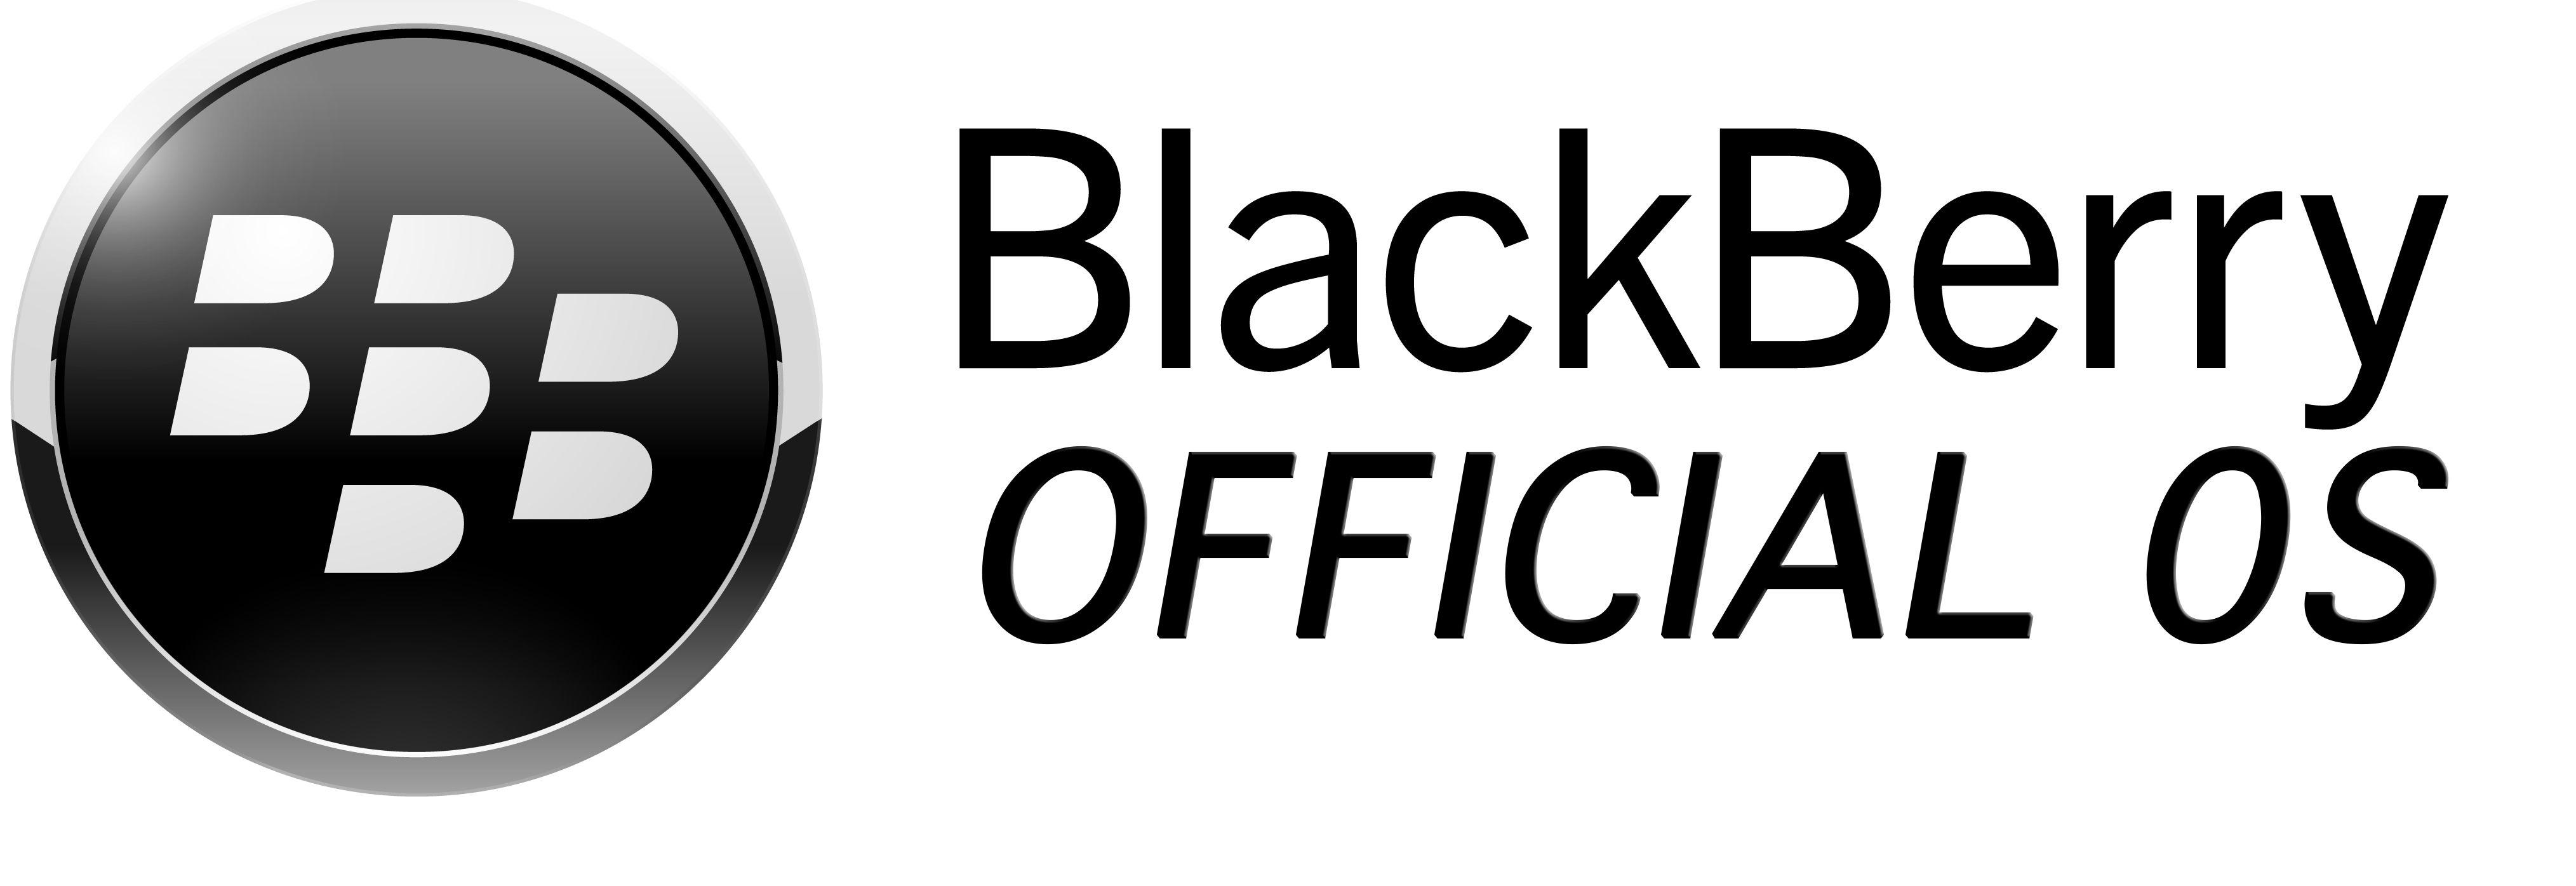 BlackBerry OS Logo - All Blackberry Latest Official OS Download Here | mobileinfosite